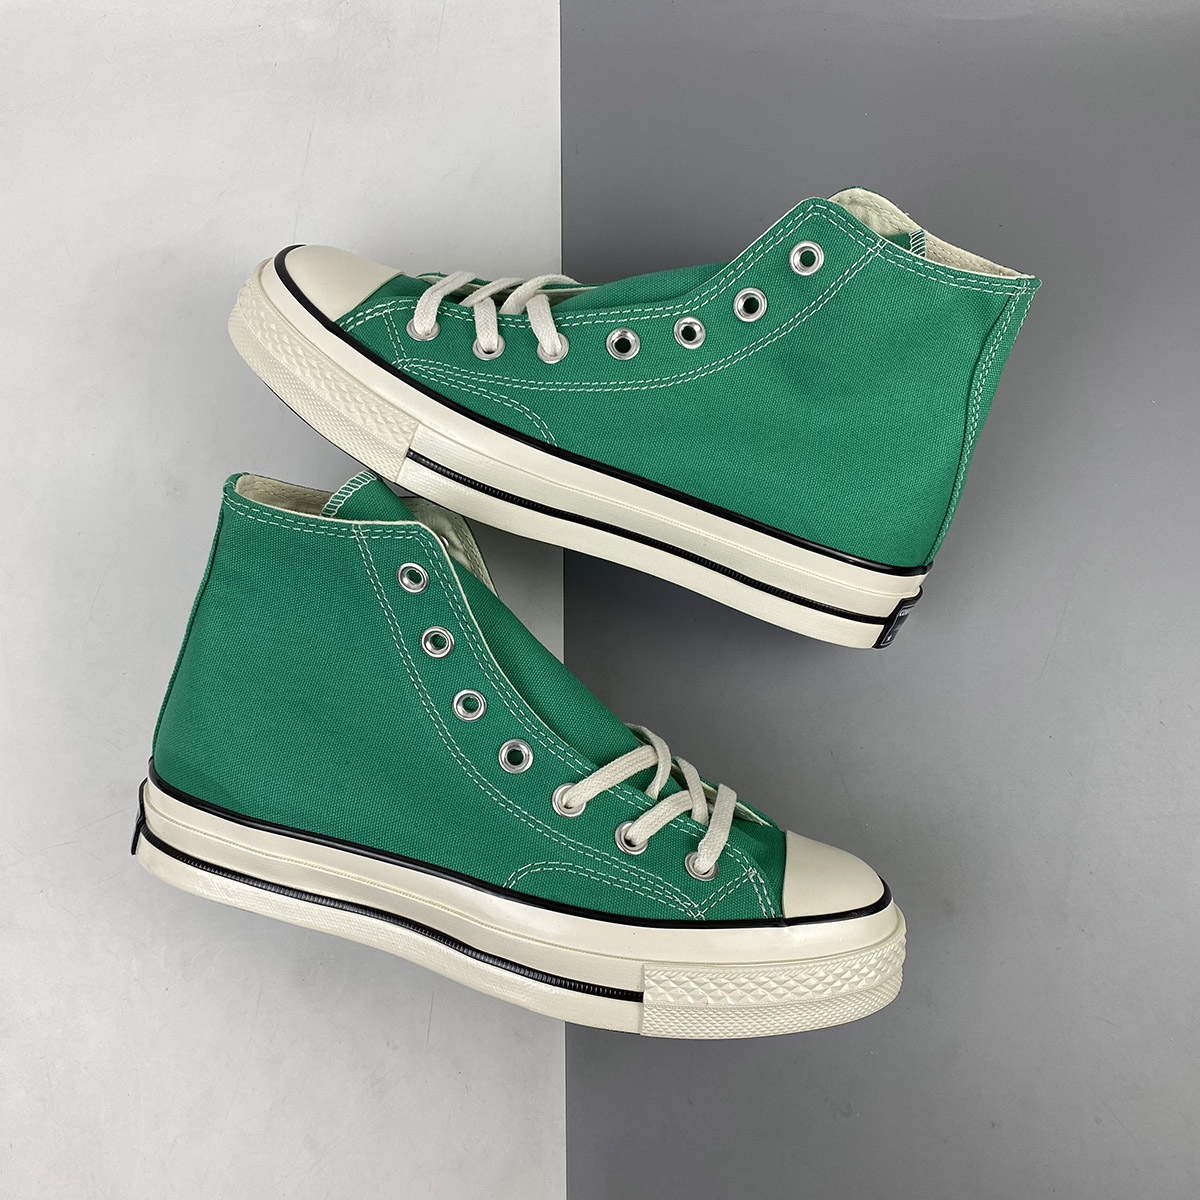 Converse Color Chuck 70 Court Green/Egret/Black For Sale – The Sole Line